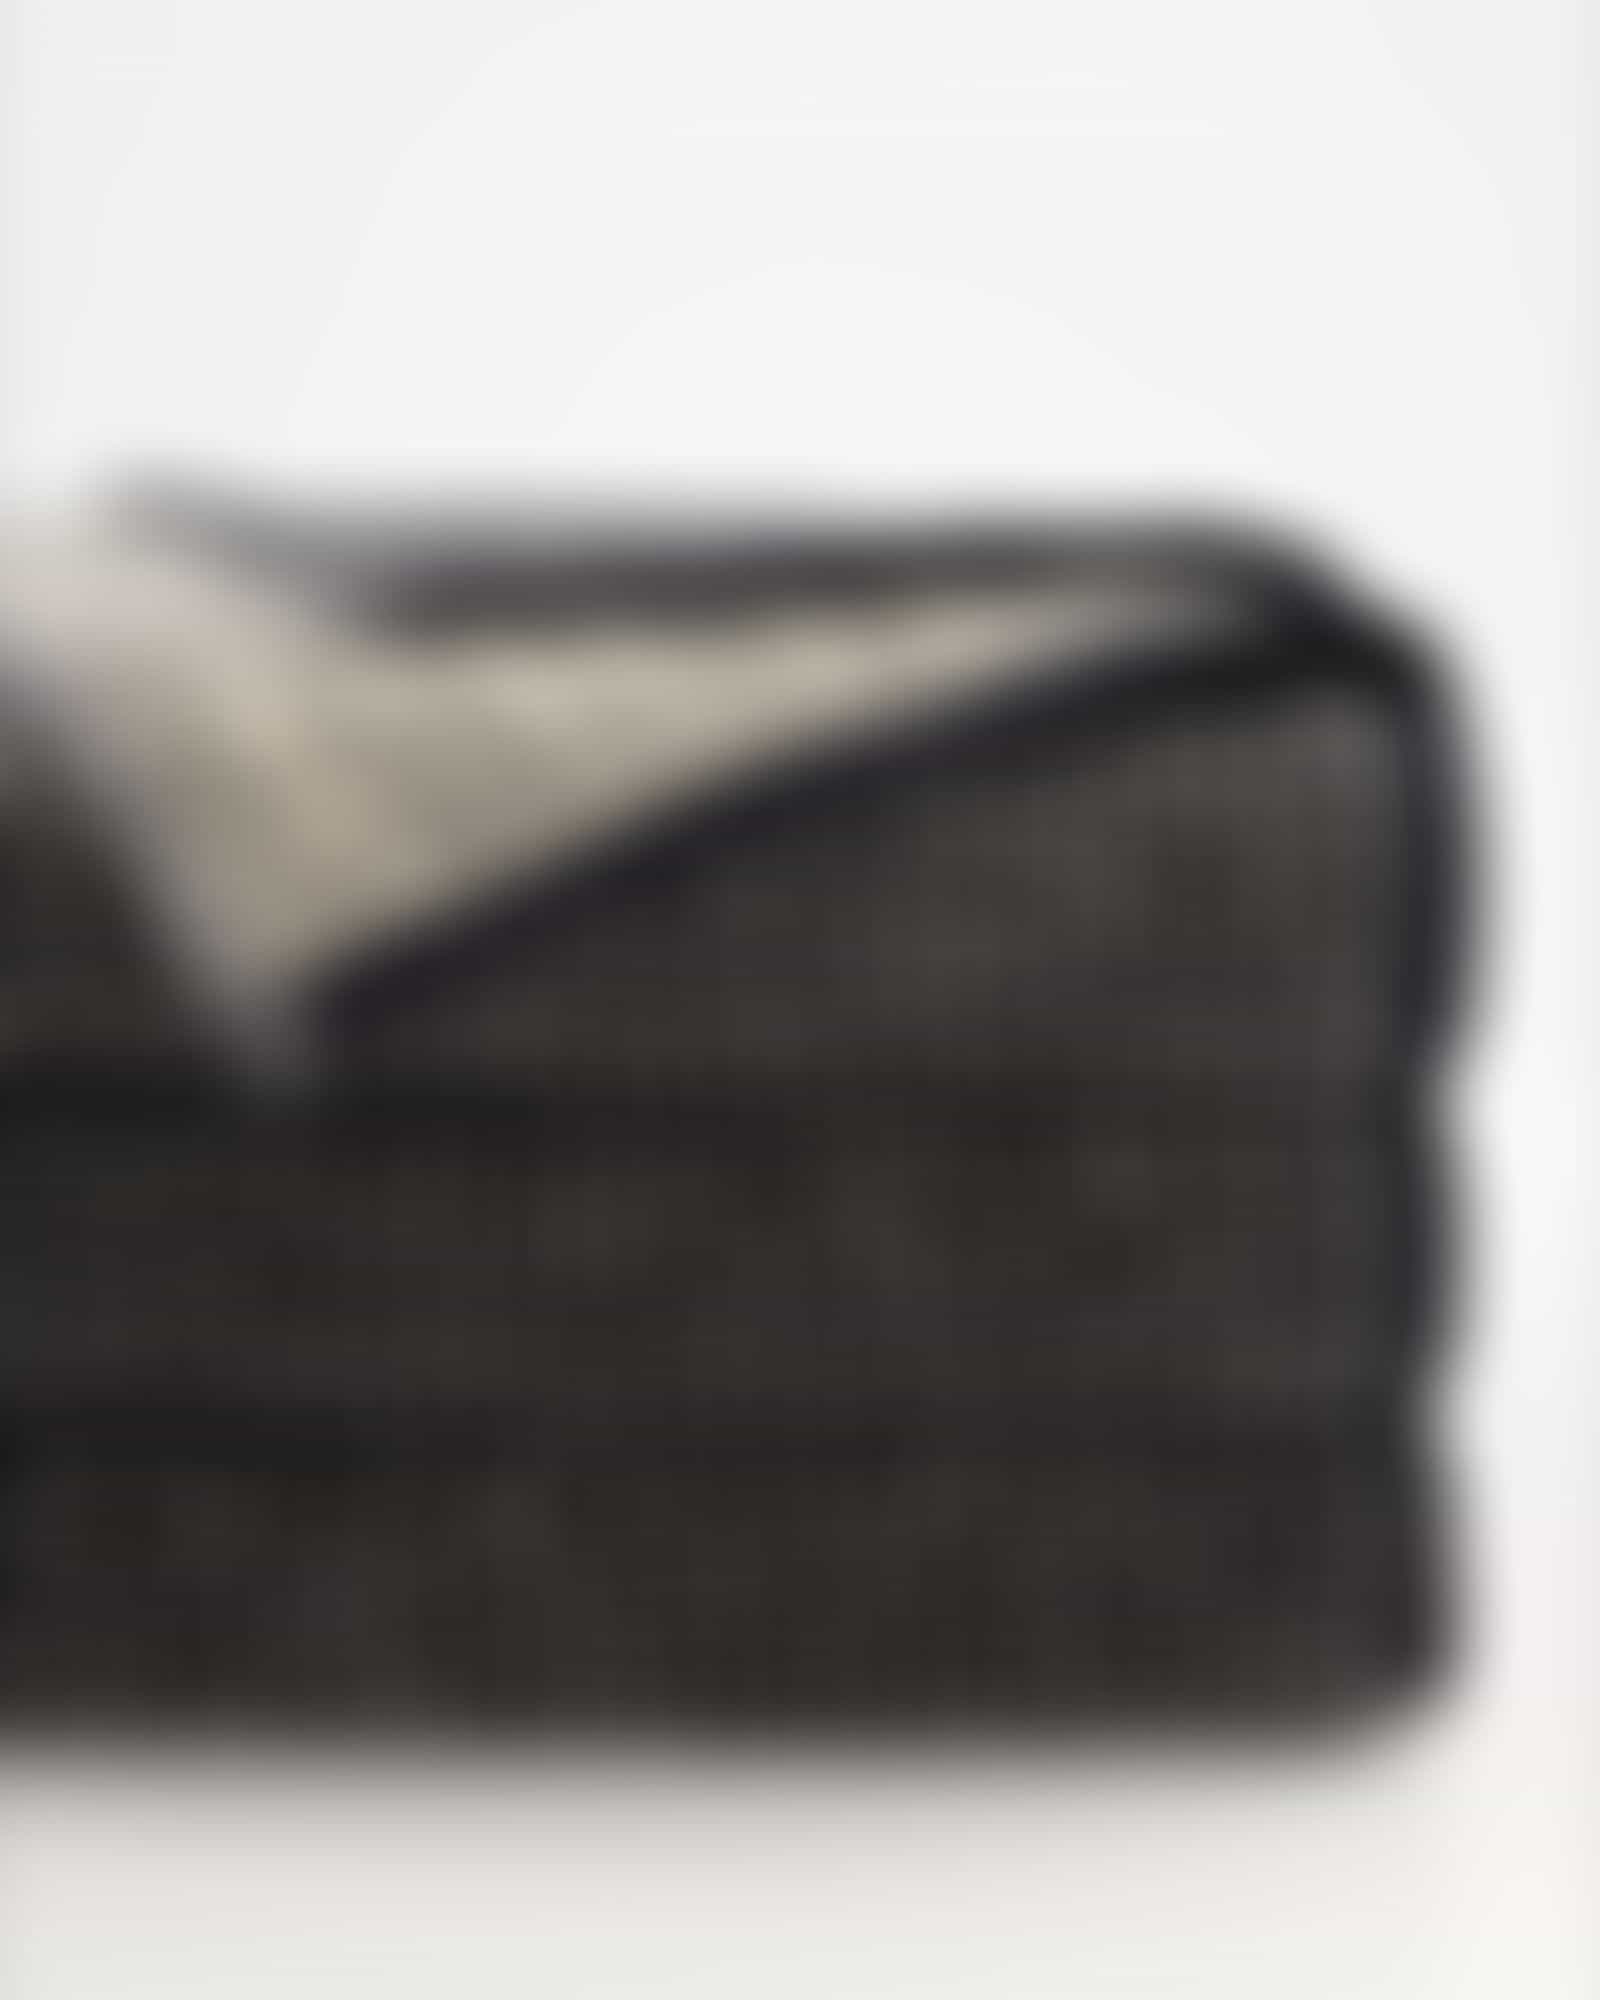 JOOP! Handtücher Select Allover 1695 - Farbe: ebony - 39 - Handtuch 50x100 cm Detailbild 2